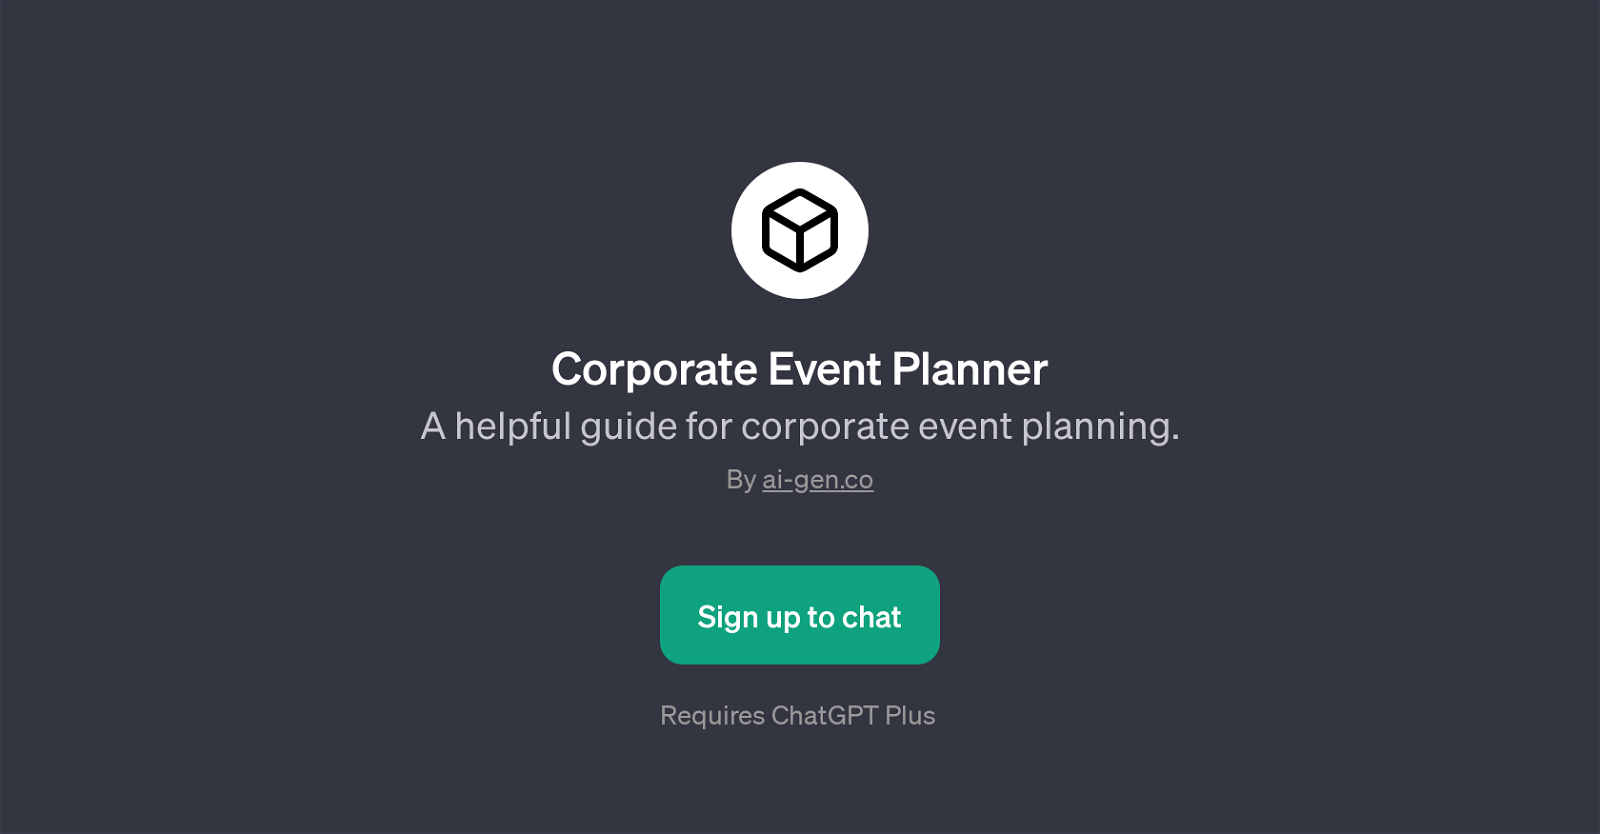 Corporate Event Planner website